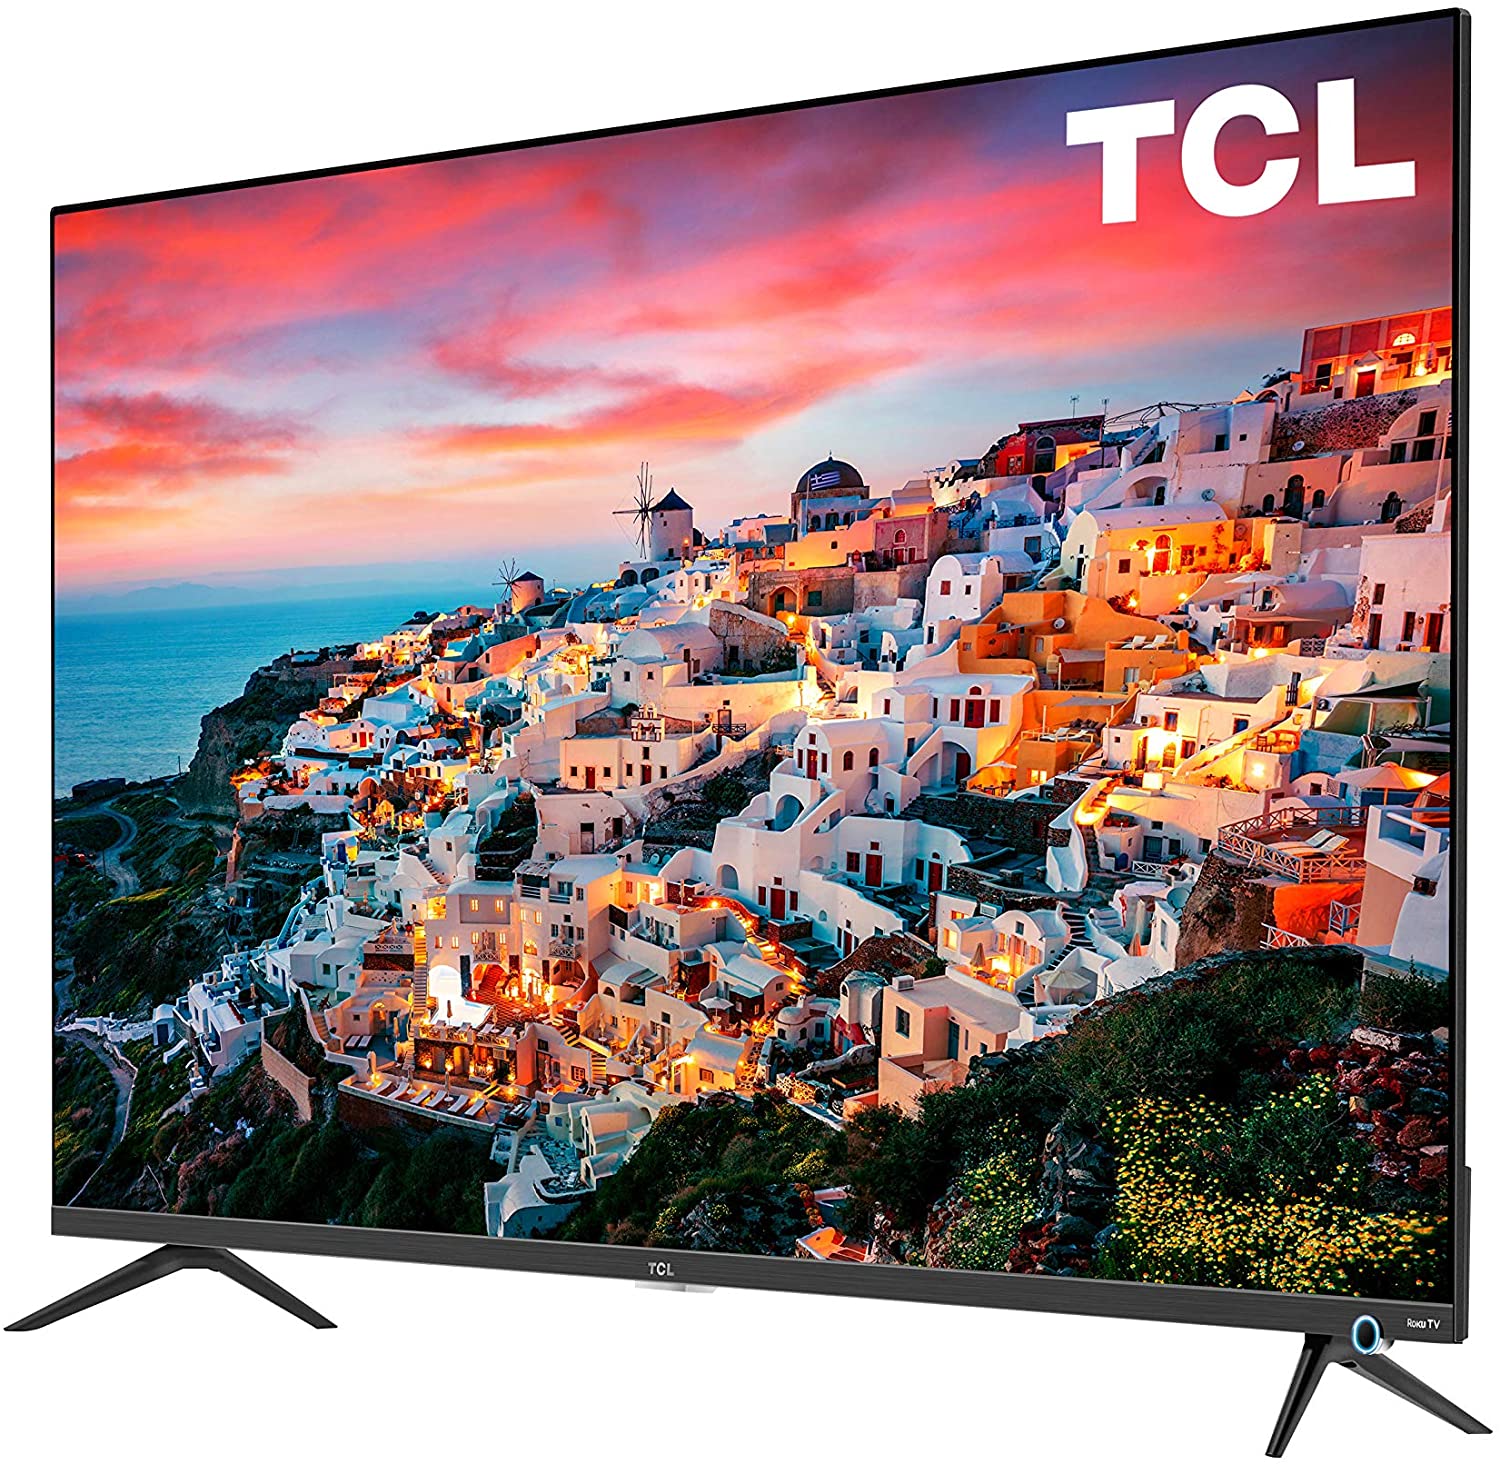 Tcl 65 дюймов купить. TCL 65 дюймов 4k HDR TV. Телевизор ТСЛ 65. Телевизор ТСЛ 65 С 635. Телевизор TCL l65p8us 65" (2019).